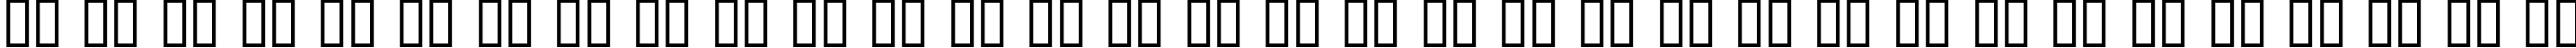 Пример написания русского алфавита шрифтом Astronaut III